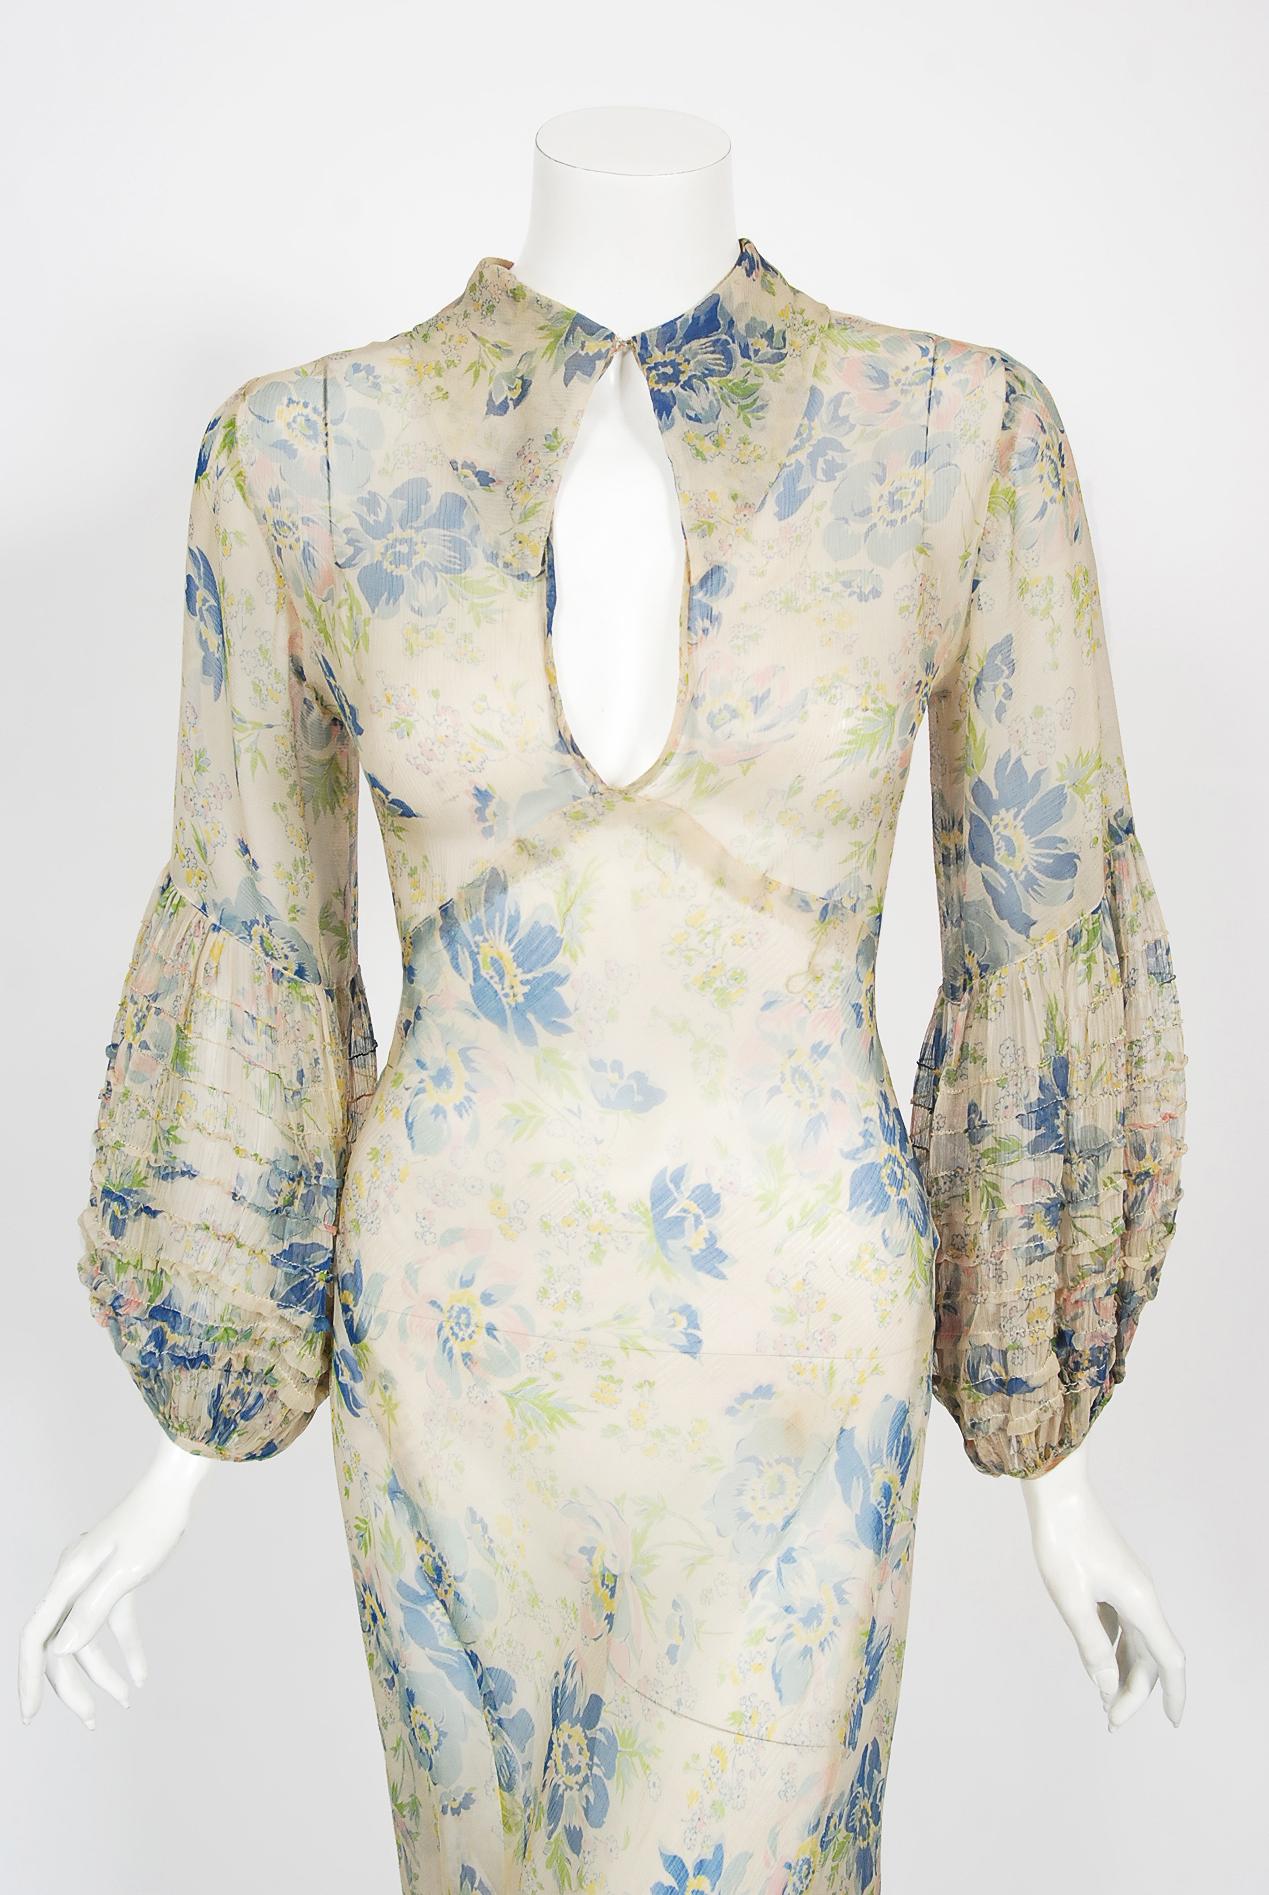 Women's Vintage 1930's Sheer Floral Print Chiffon Pintuck Billow-Sleeve Bias Cut Gown